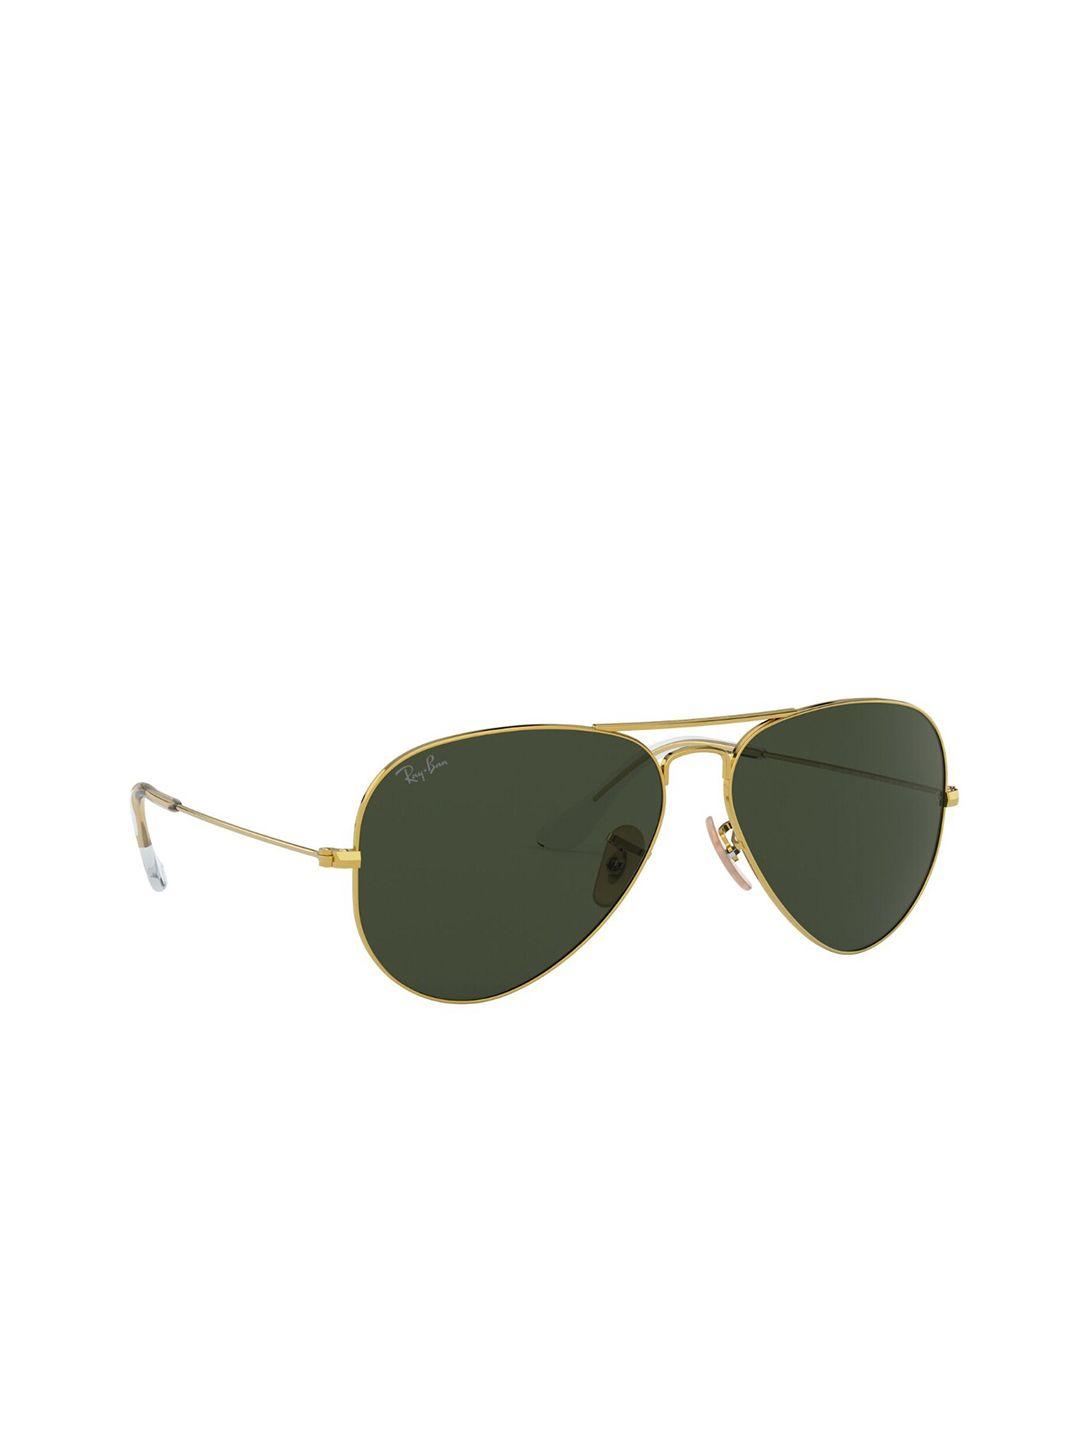 ray-ban unisex green lens & gold-toned uv protected aviator sunglasses 8056597316675